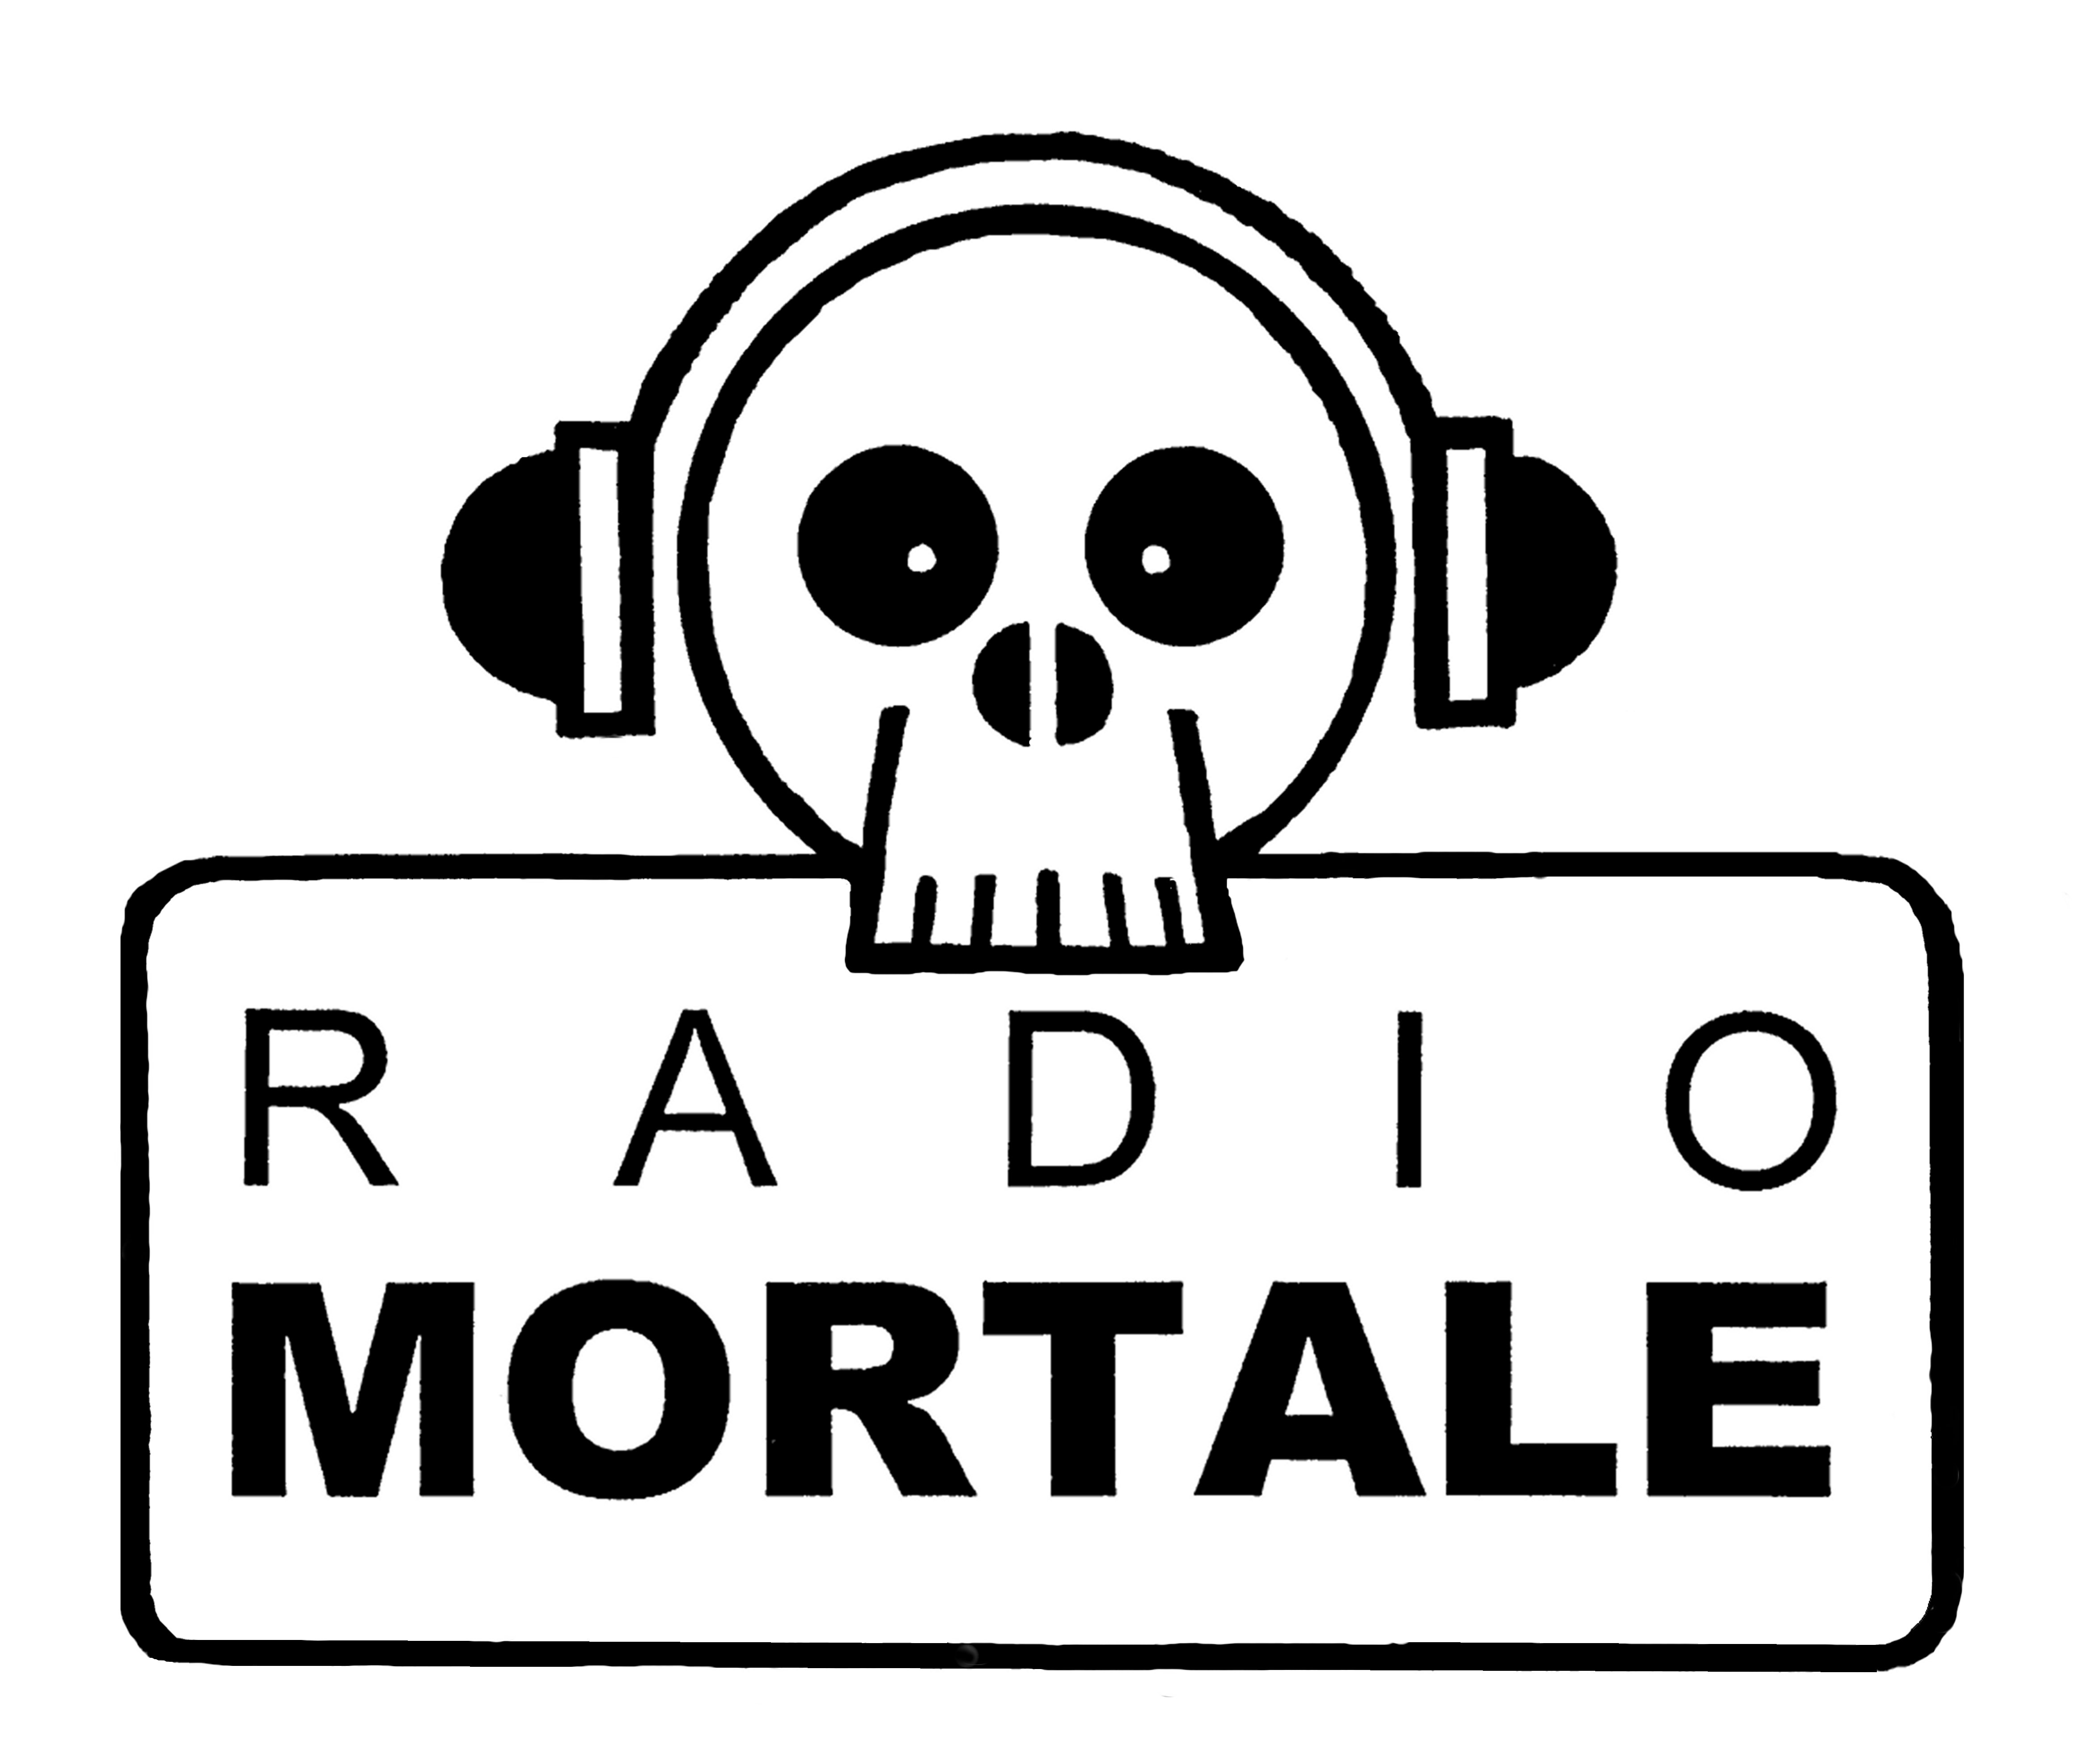 Radio Mortale